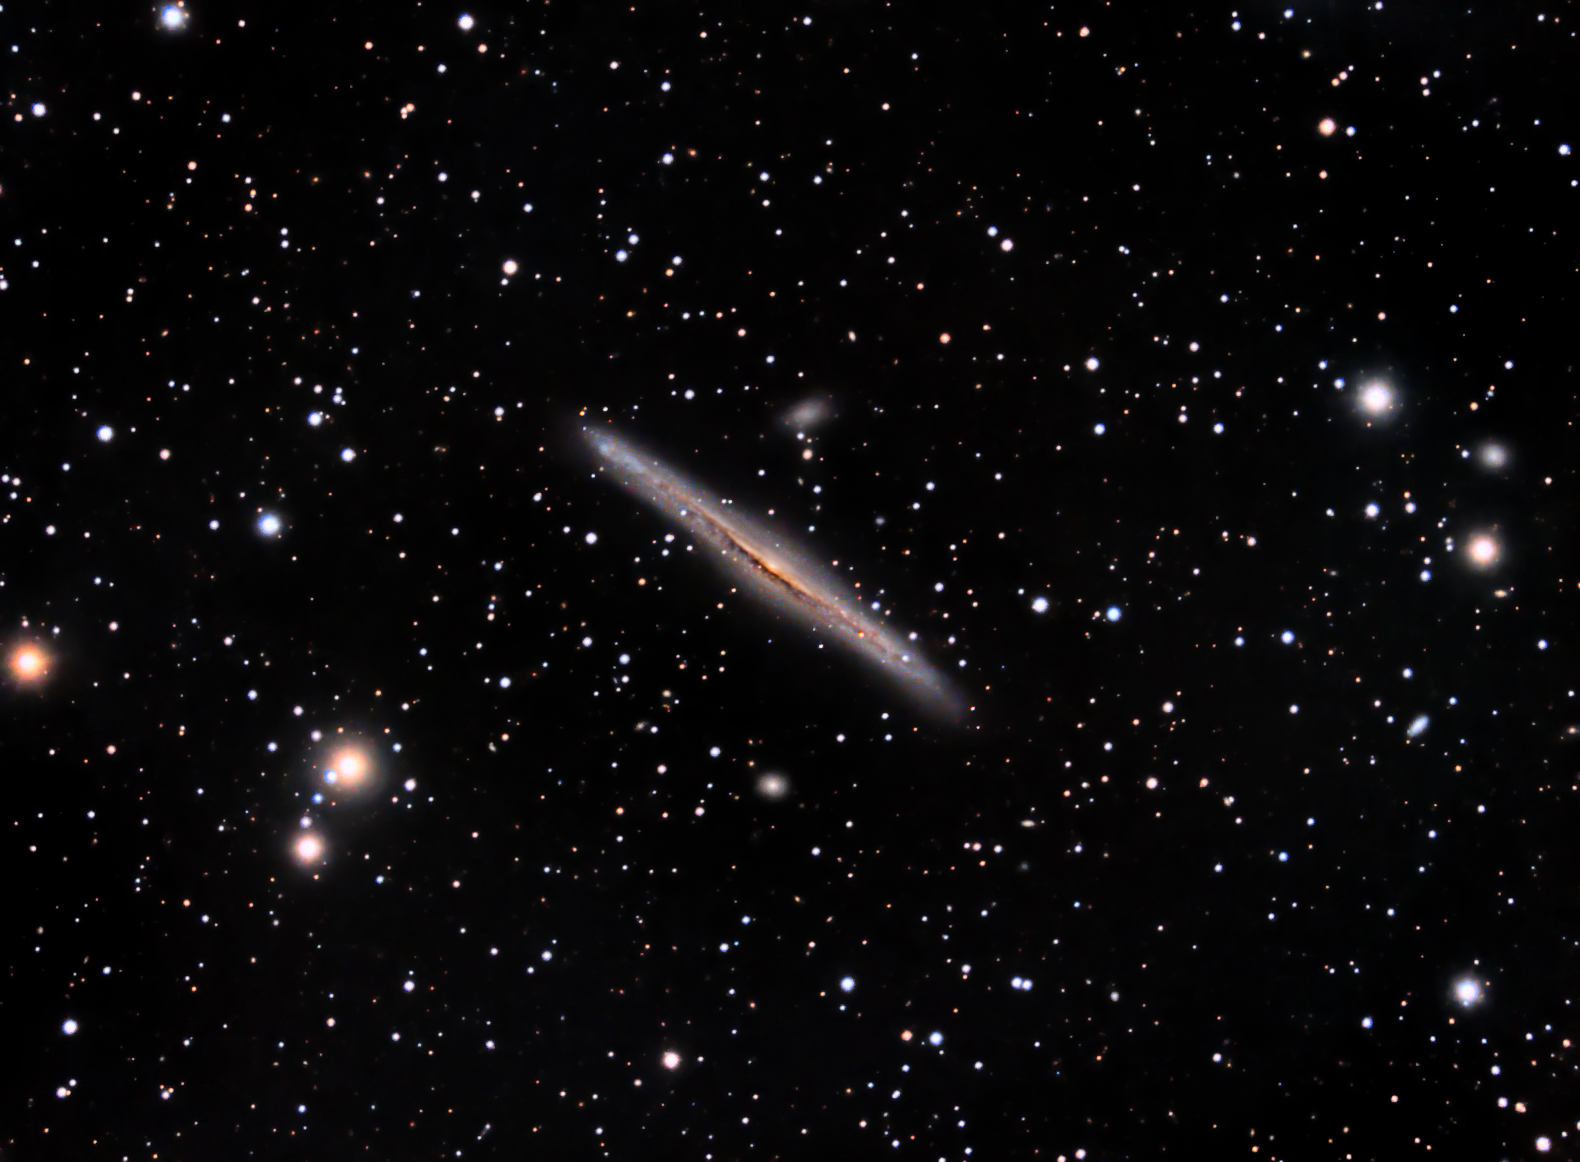 Edge On Spiral Galaxy NGC 5170